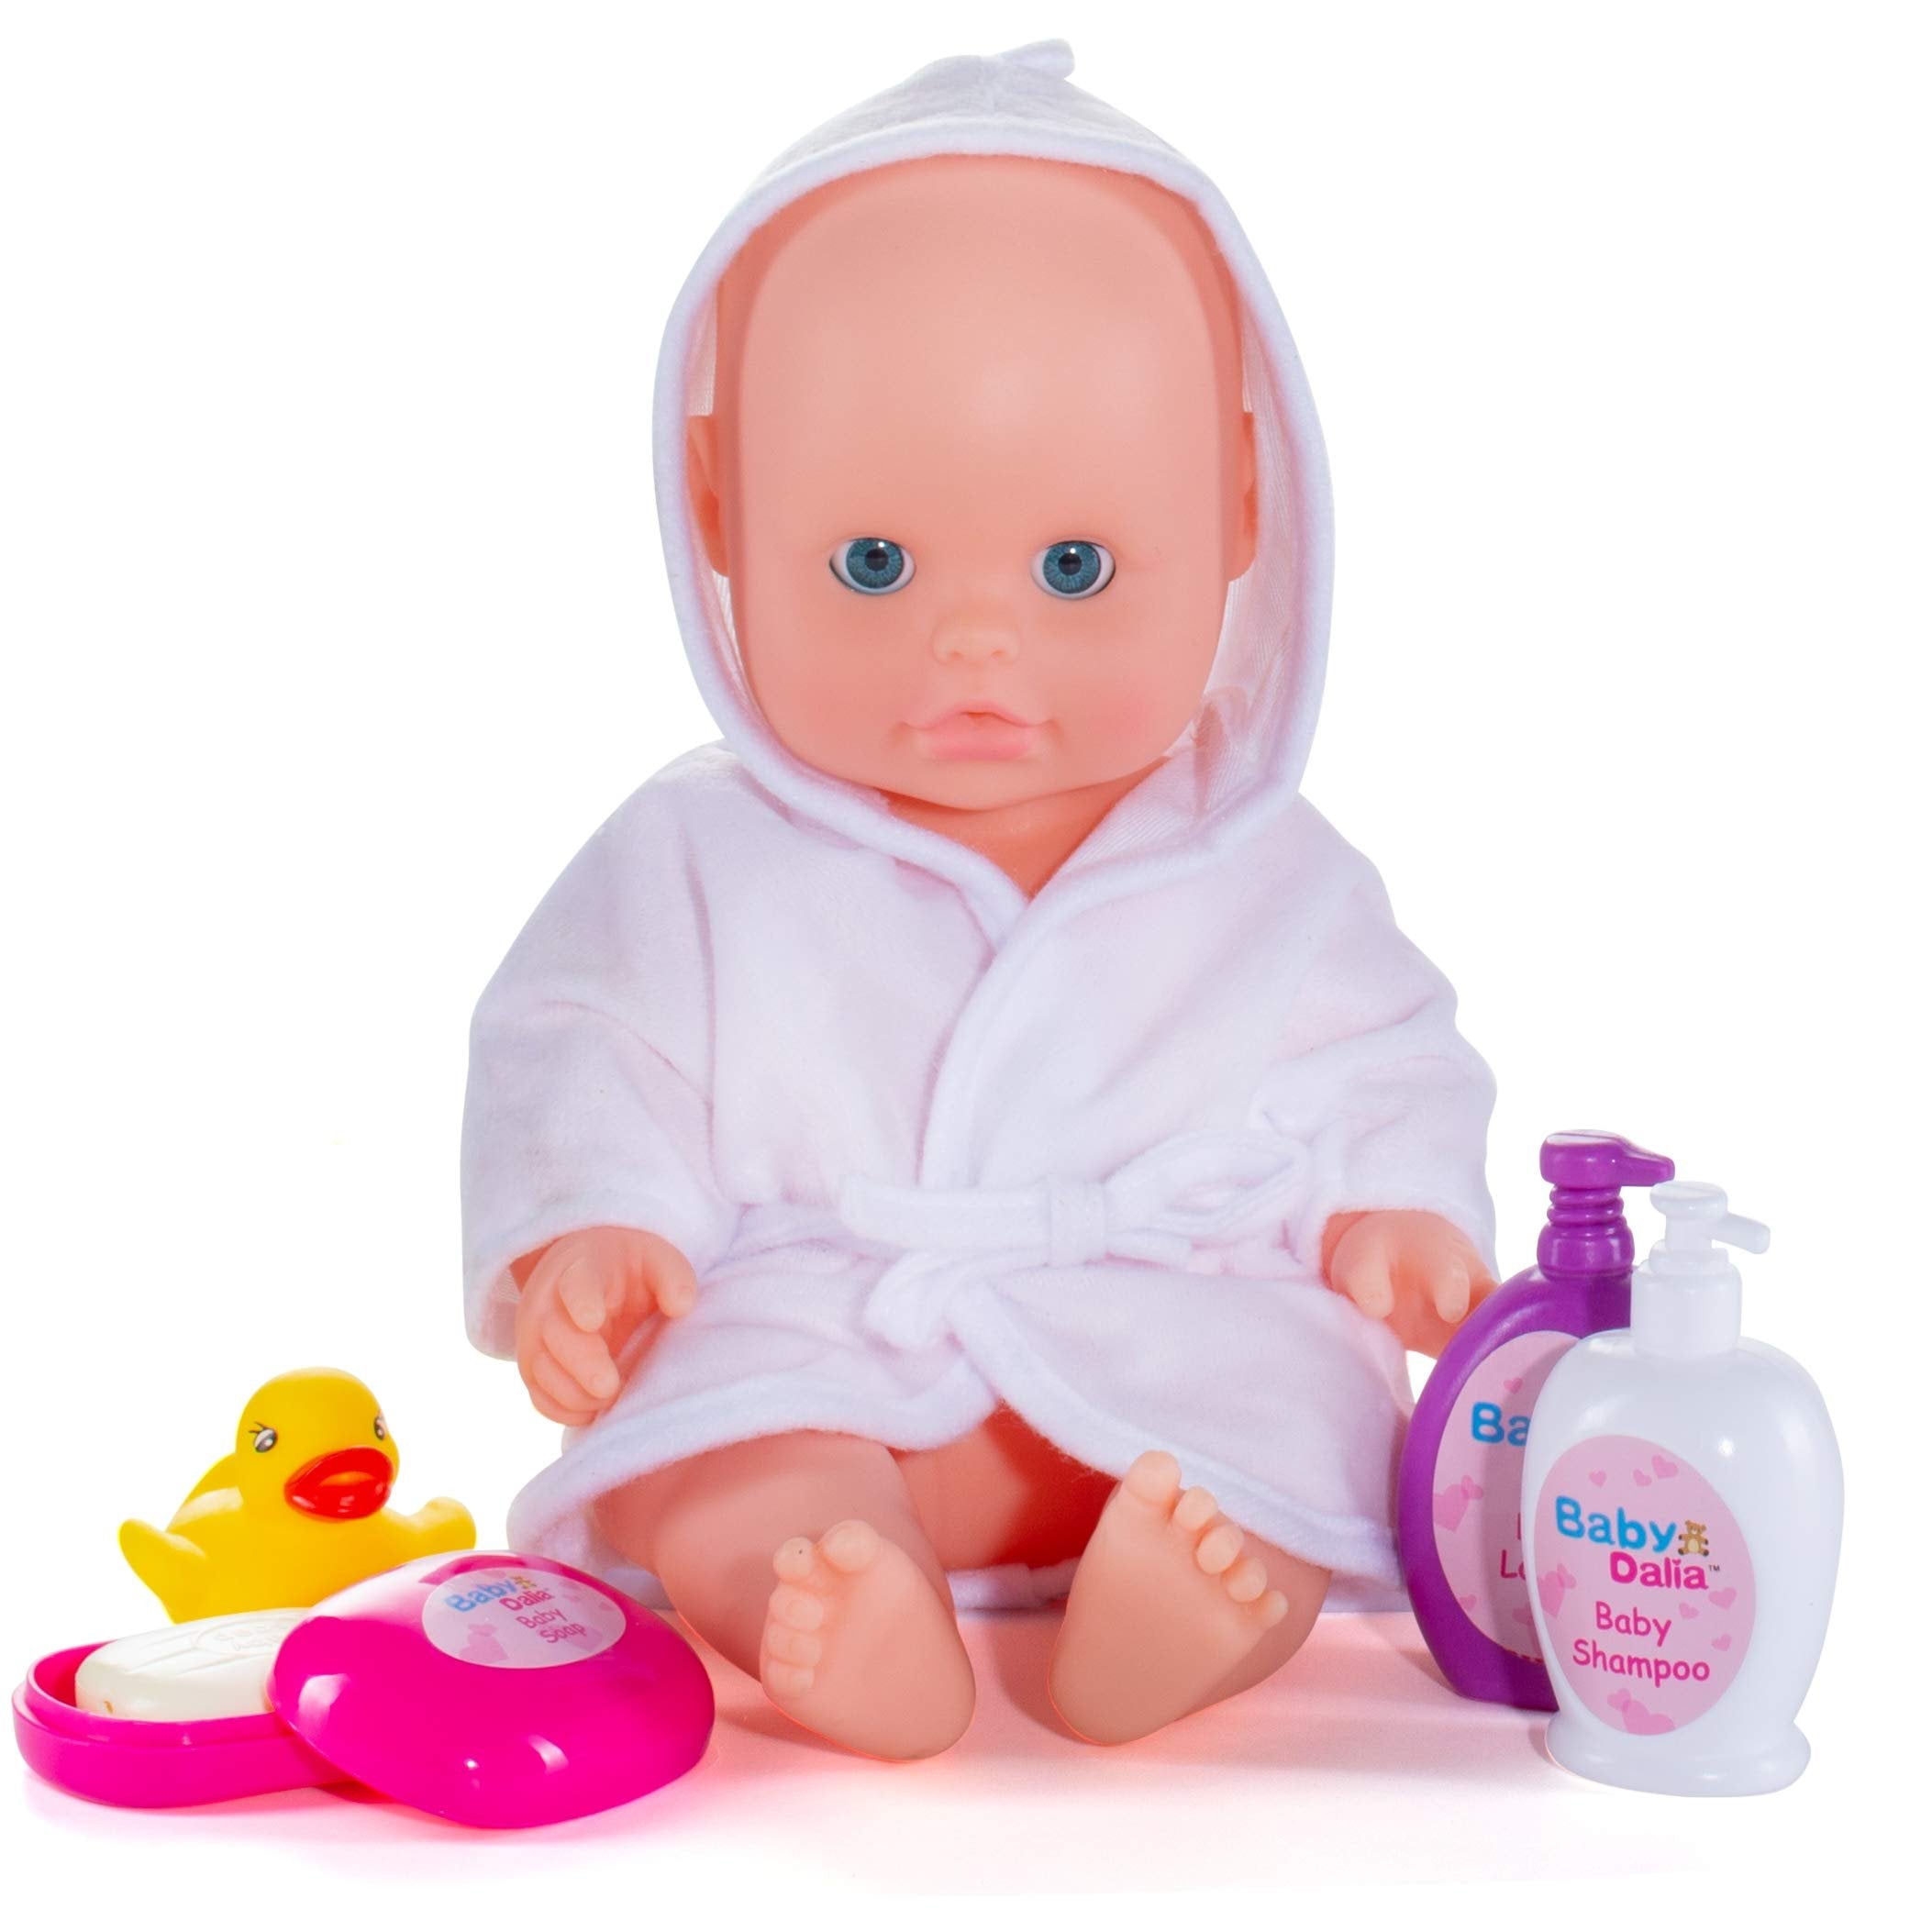 PREXTEX 8 Piece Baby Doll Bathtub Set with Doll, Crib-Shaped Bathtub, Robe and Bath Toys Accessories - Baby Dalia Dolls Bathing Gift Toy Alive-Like Set for Boys and Girls